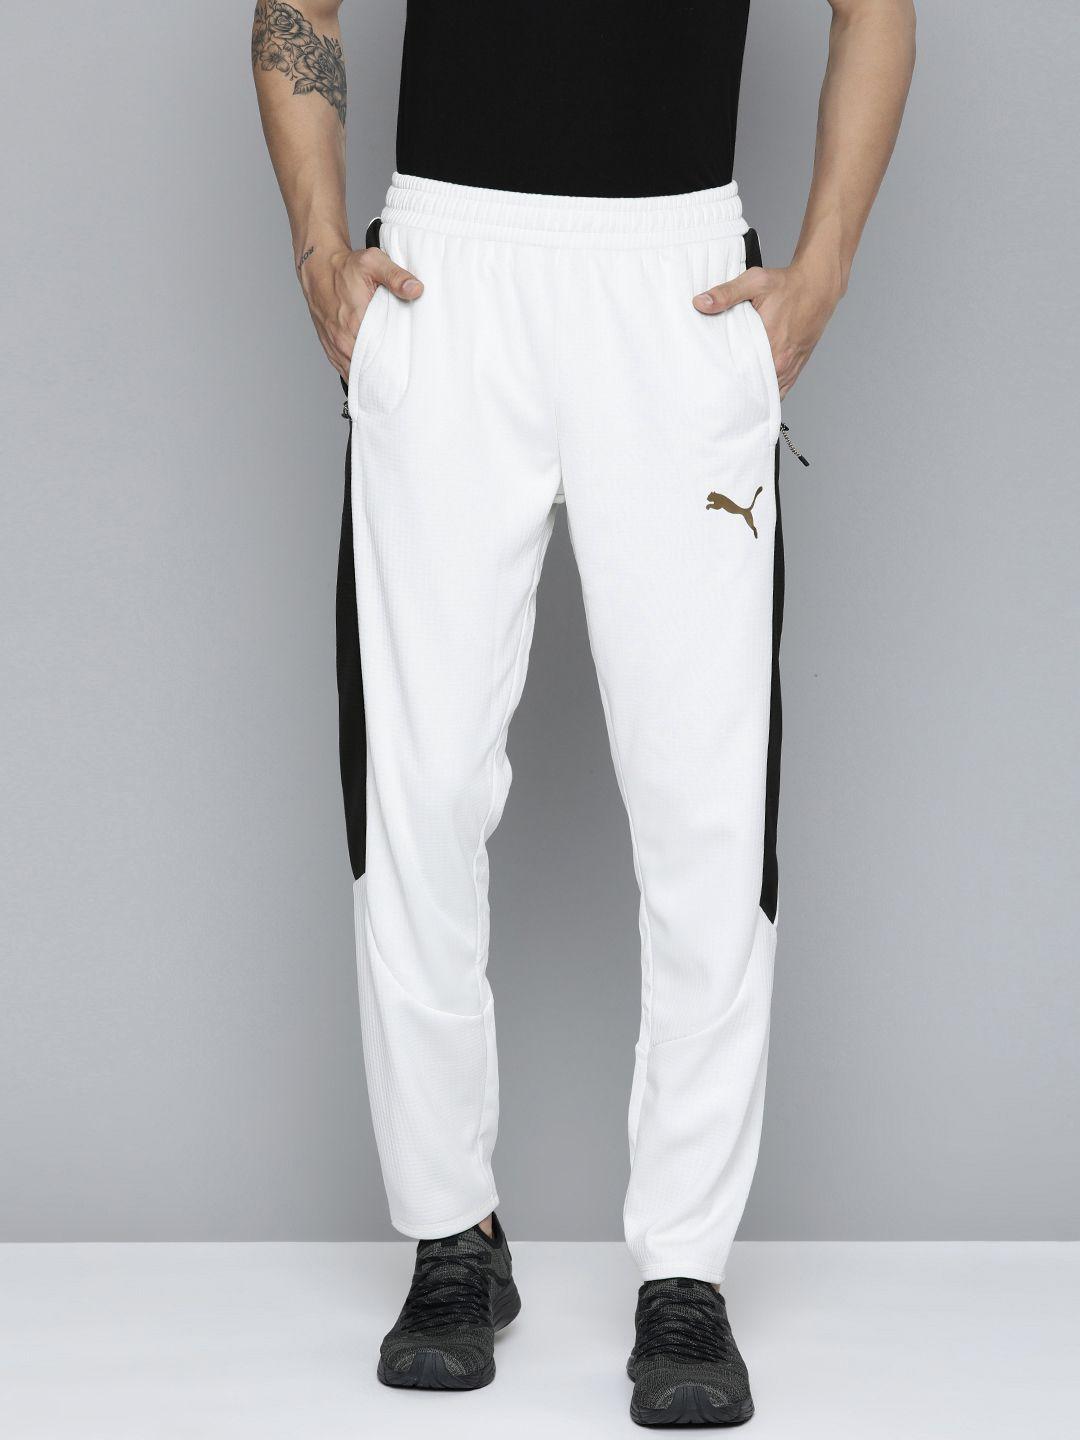 puma-men-white-checked-self-design-slim-fit-mid-rise-evostripe-warmcell-track-pants